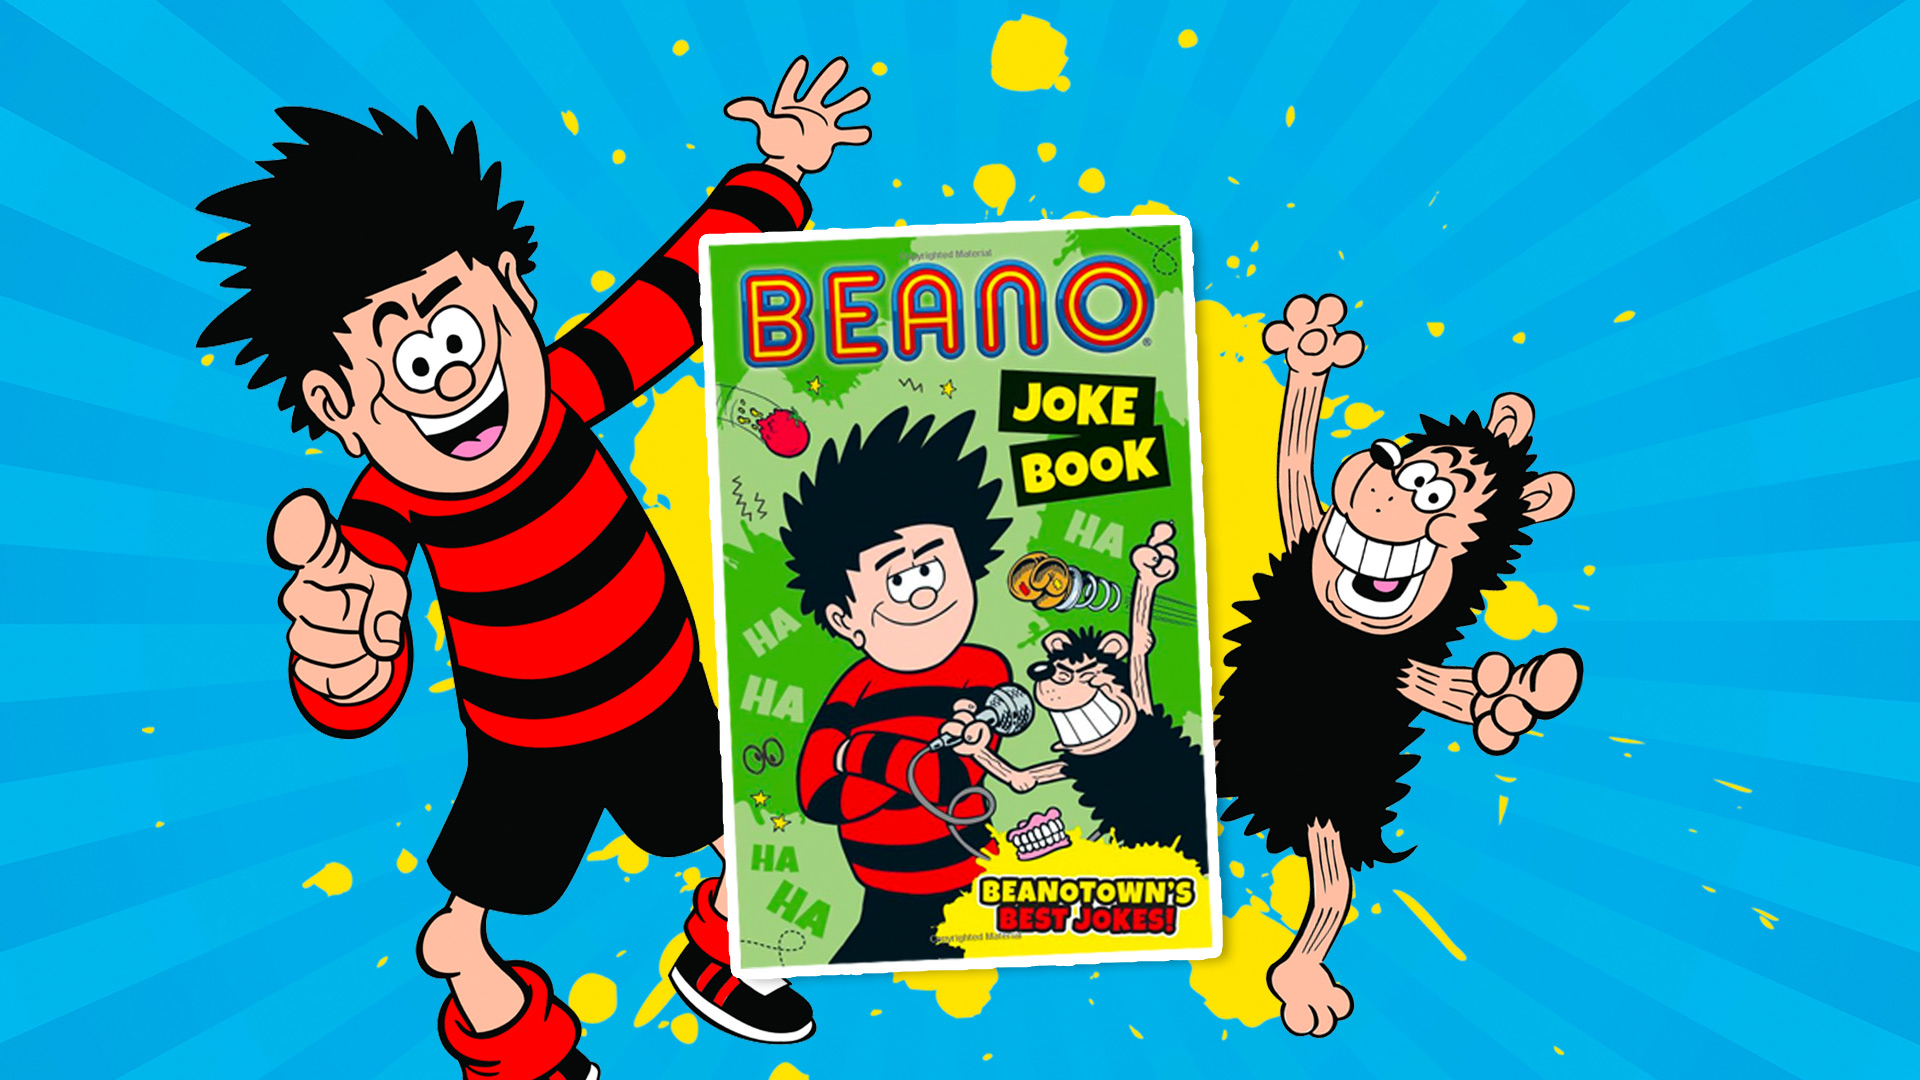 The Beano Joke Book